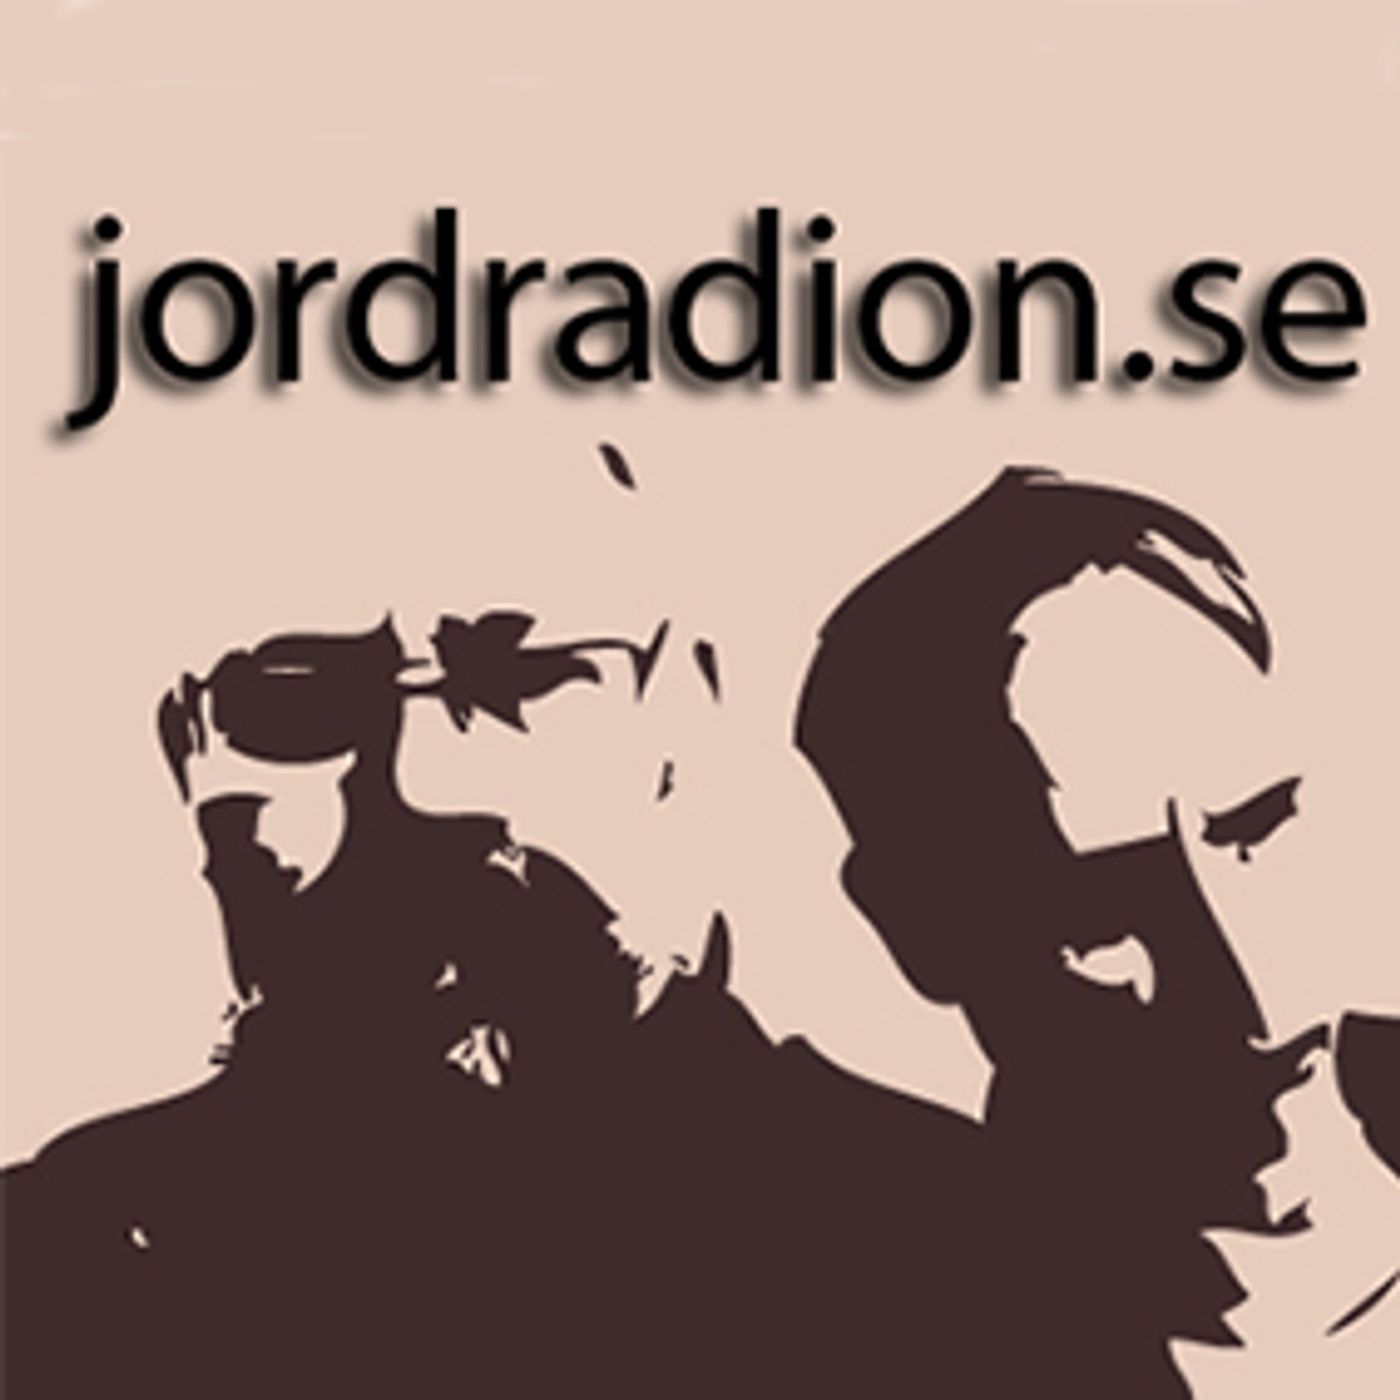 Jordradion